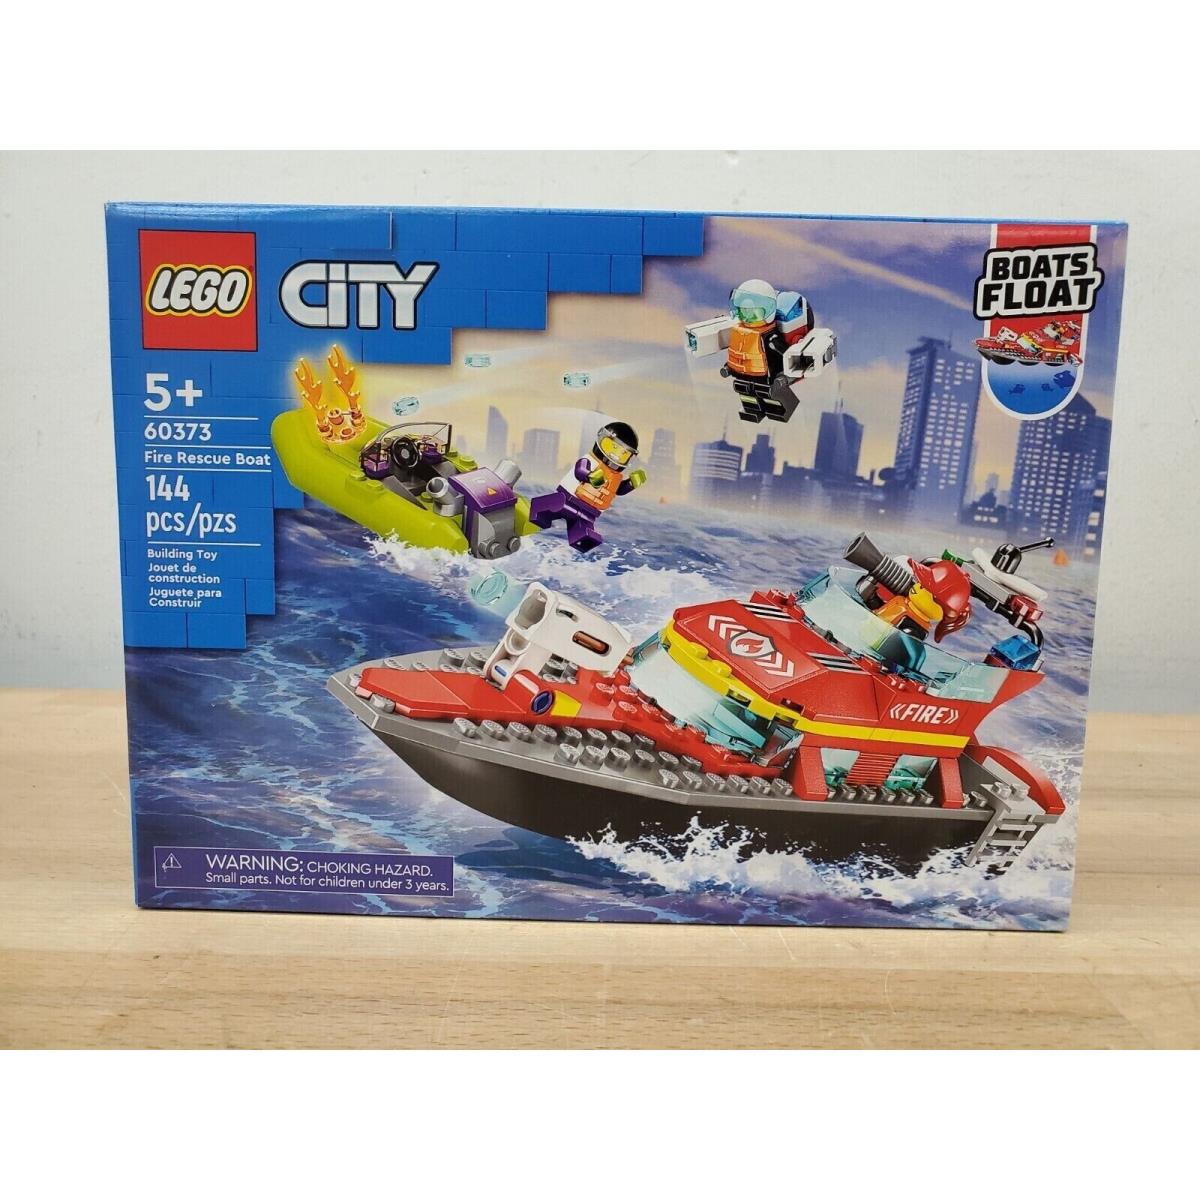 Lego City: Fire Rescue Boat 60373 Building Set